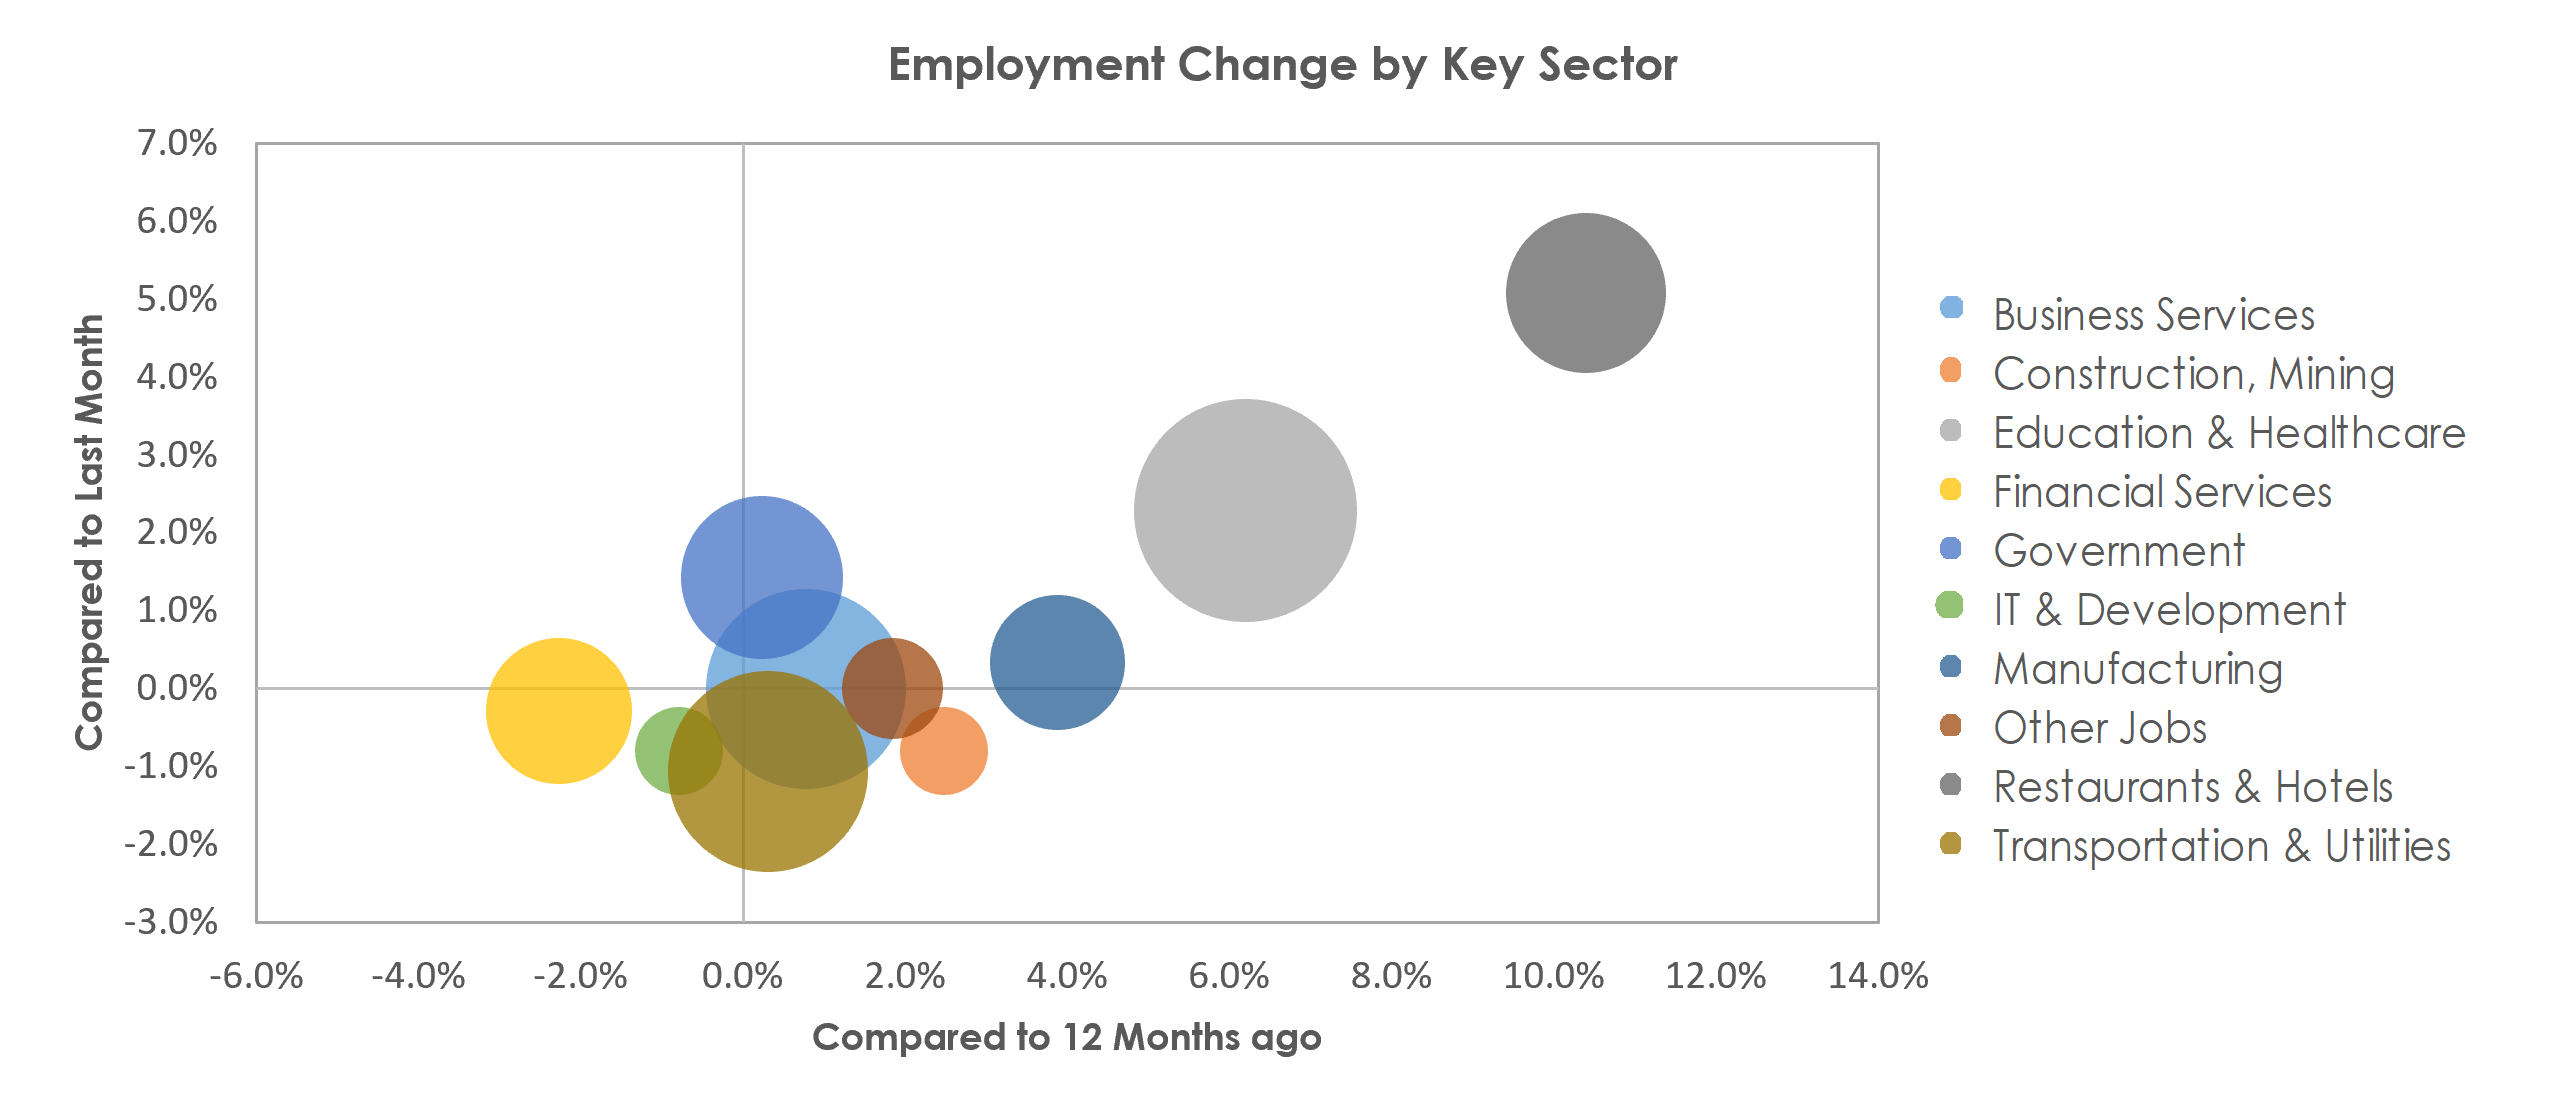 Bridgeport-Stamford-Norwalk, CT Unemployment by Industry February 2023